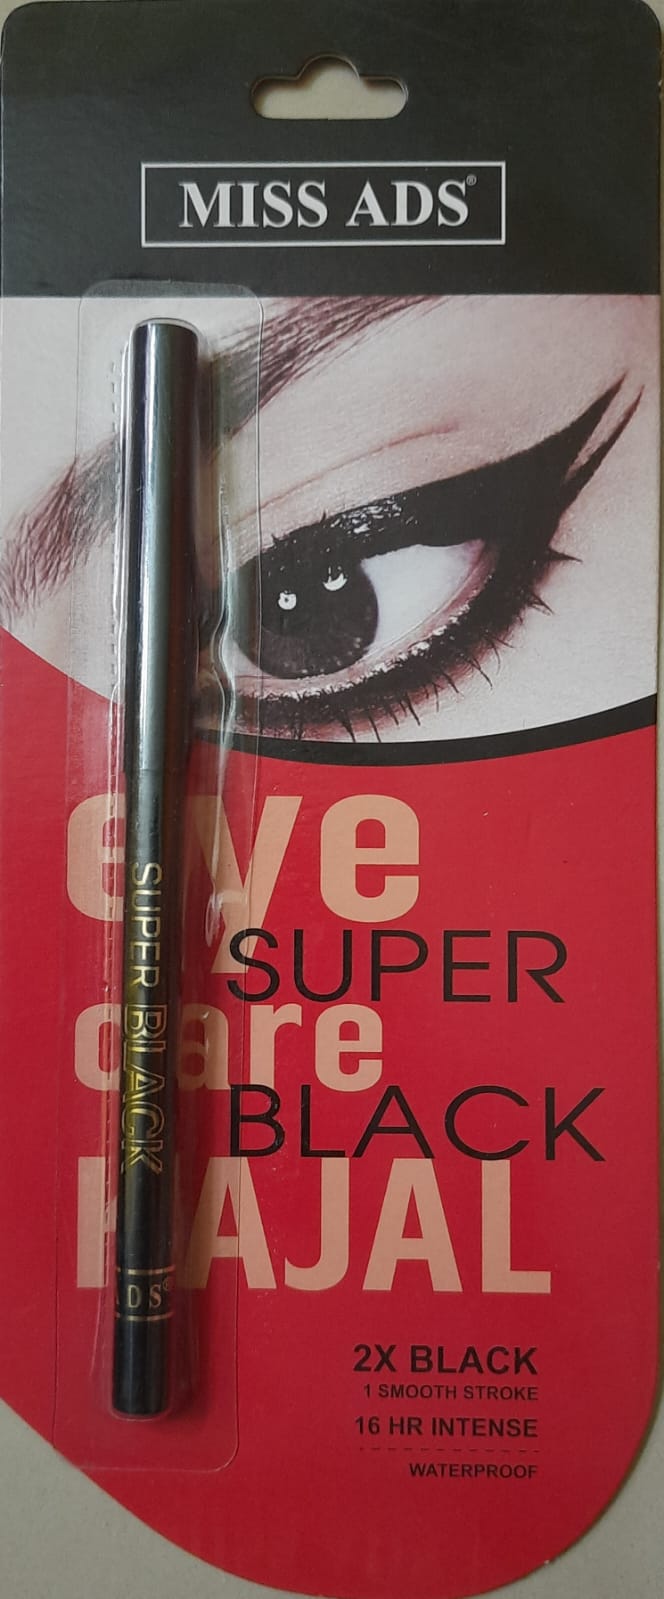 Eye Super care Black Kajal  - 2X BLACK 1 Smooth Stroke - 16HR Intense - Waterproof